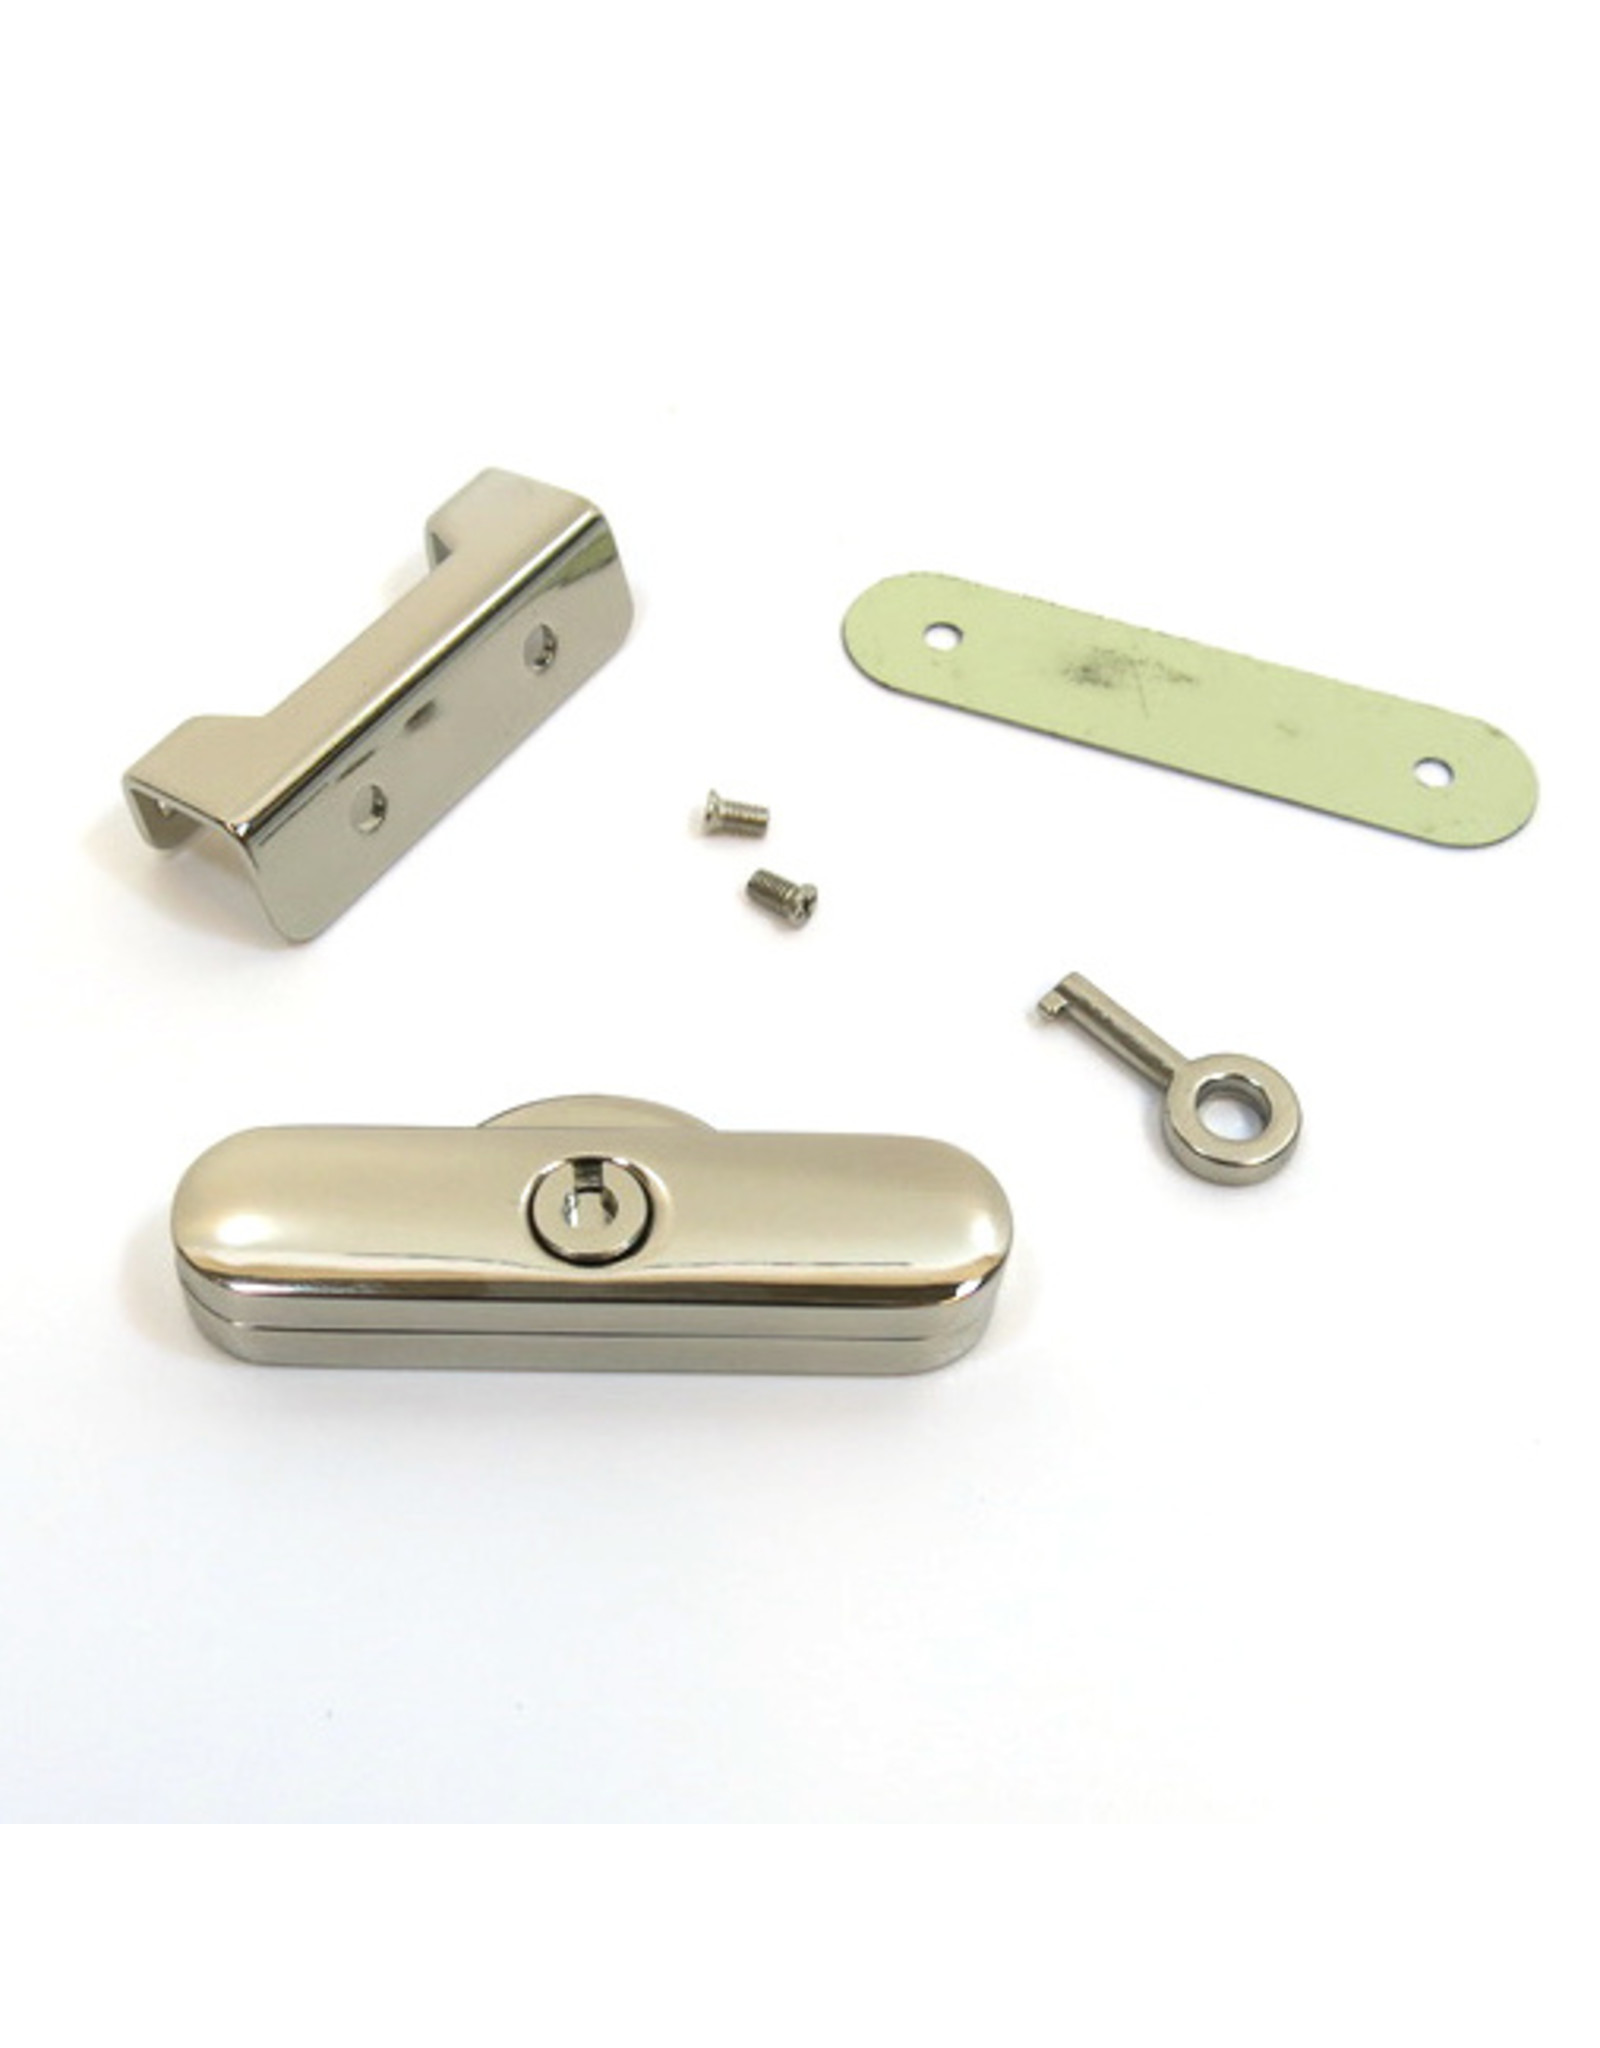 Purse/bag lock (with key lock)